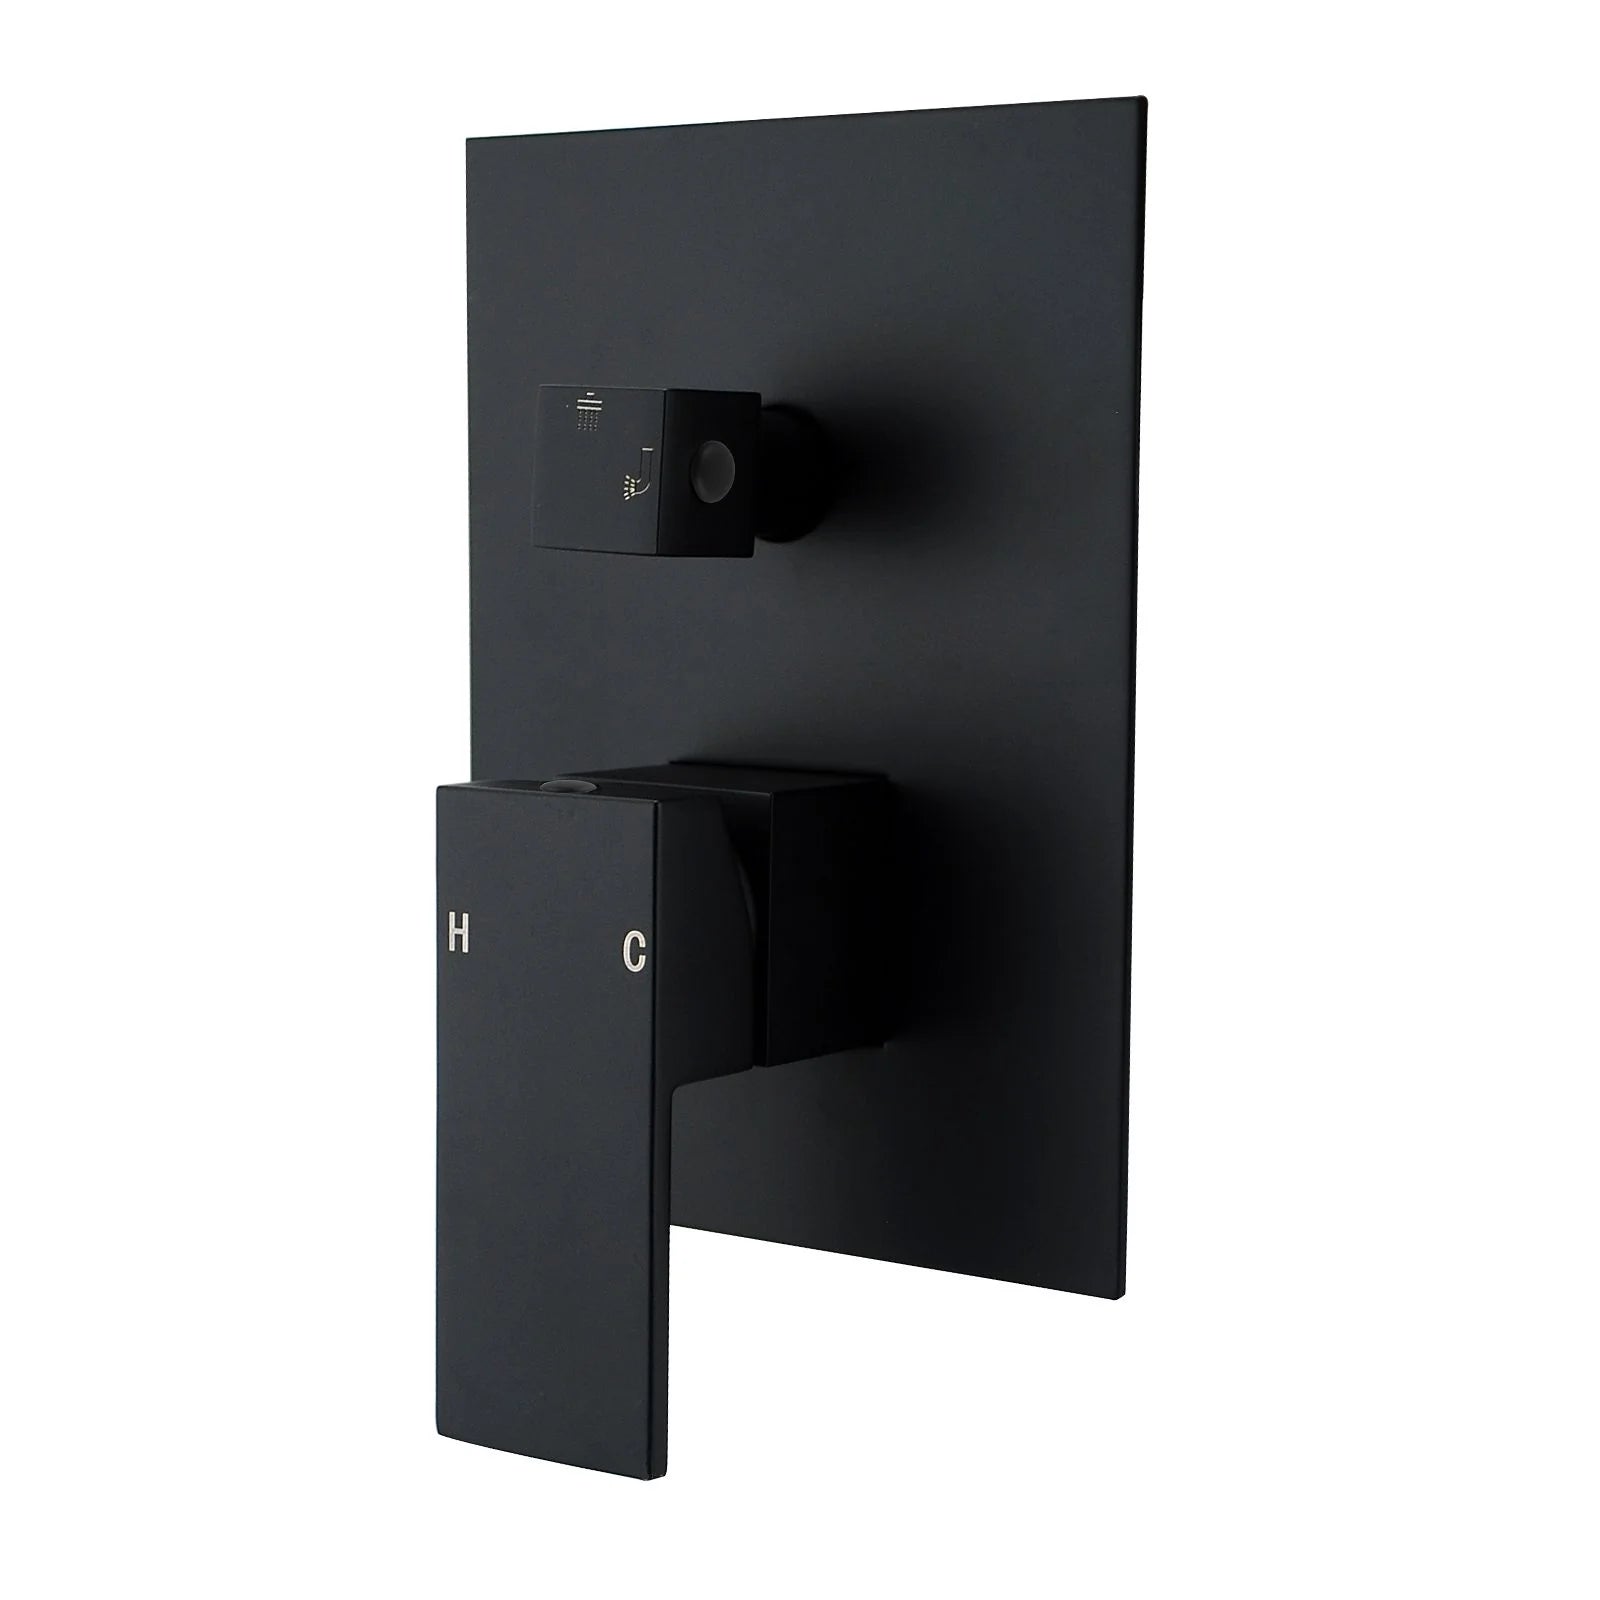 Blaze Bath/Shower Mixer Diverter: Stylish, Modern Water Control Solution-Black-CH0115_ST